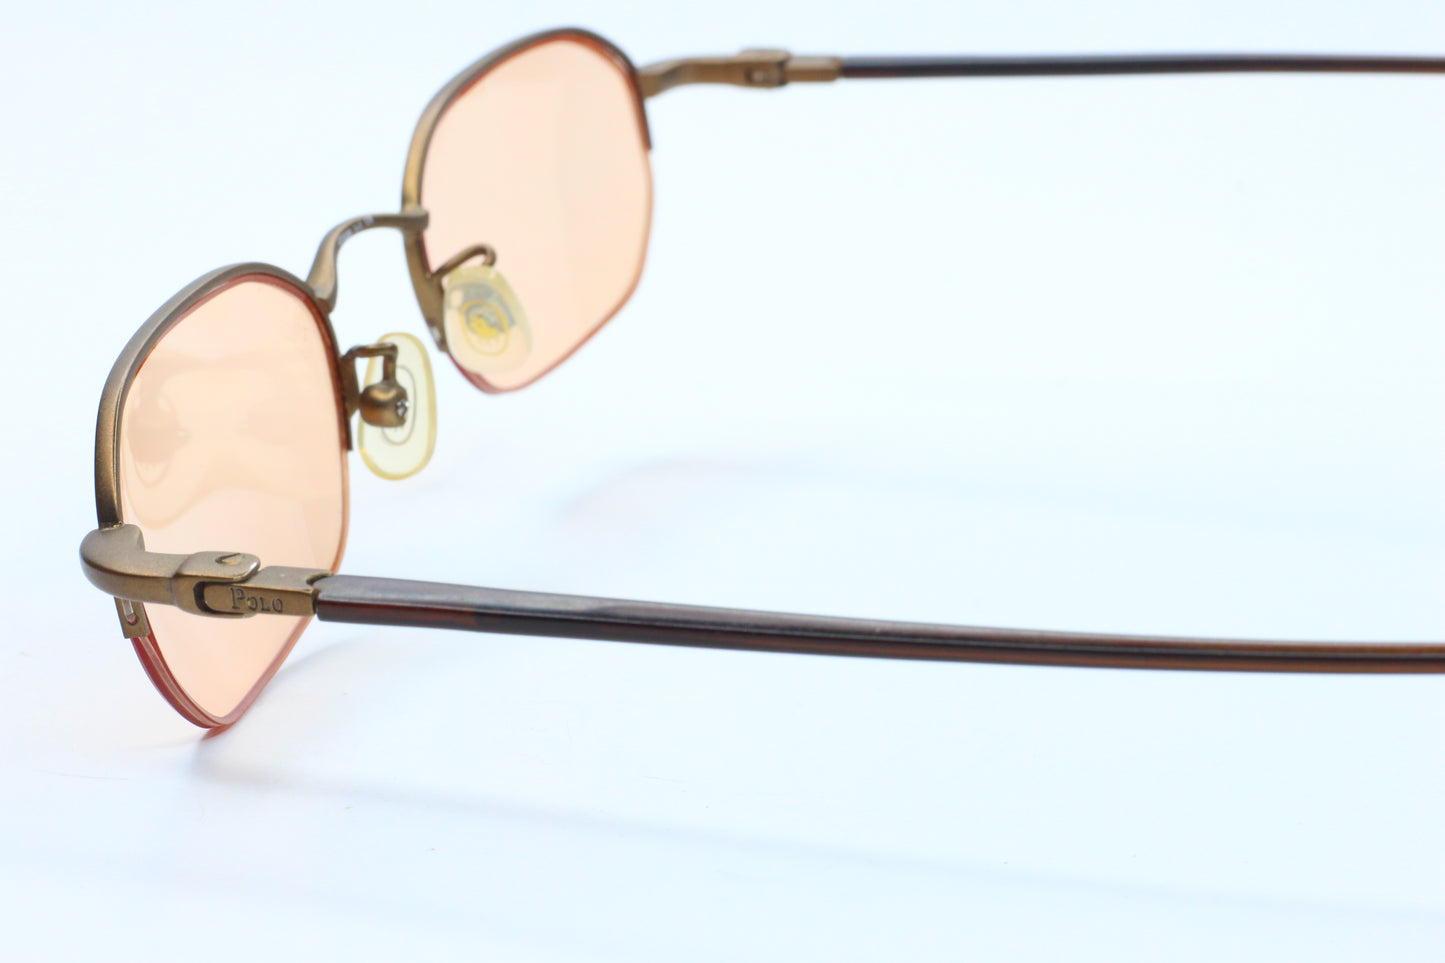 Polo Ralph Lauren 392 W5N Brown Semi Rimless Italy Designer Sunglasses